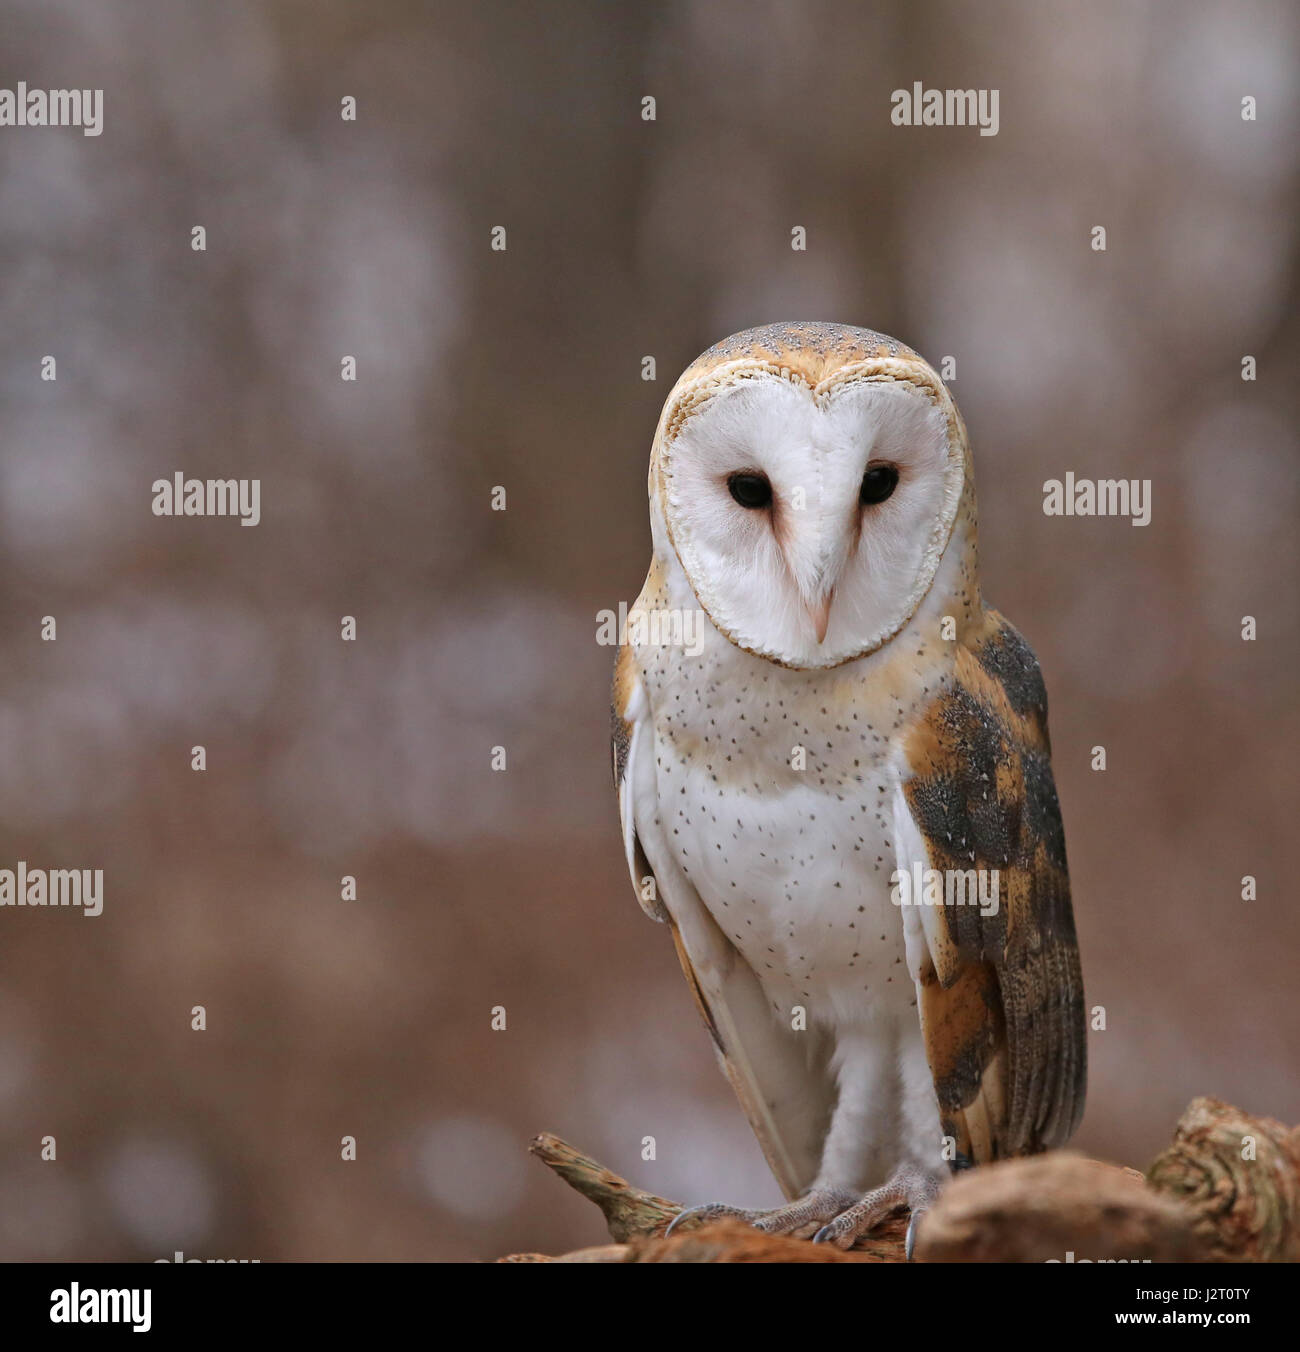 A close-up of a Barn Owl (Tyto alba). Stock Photo